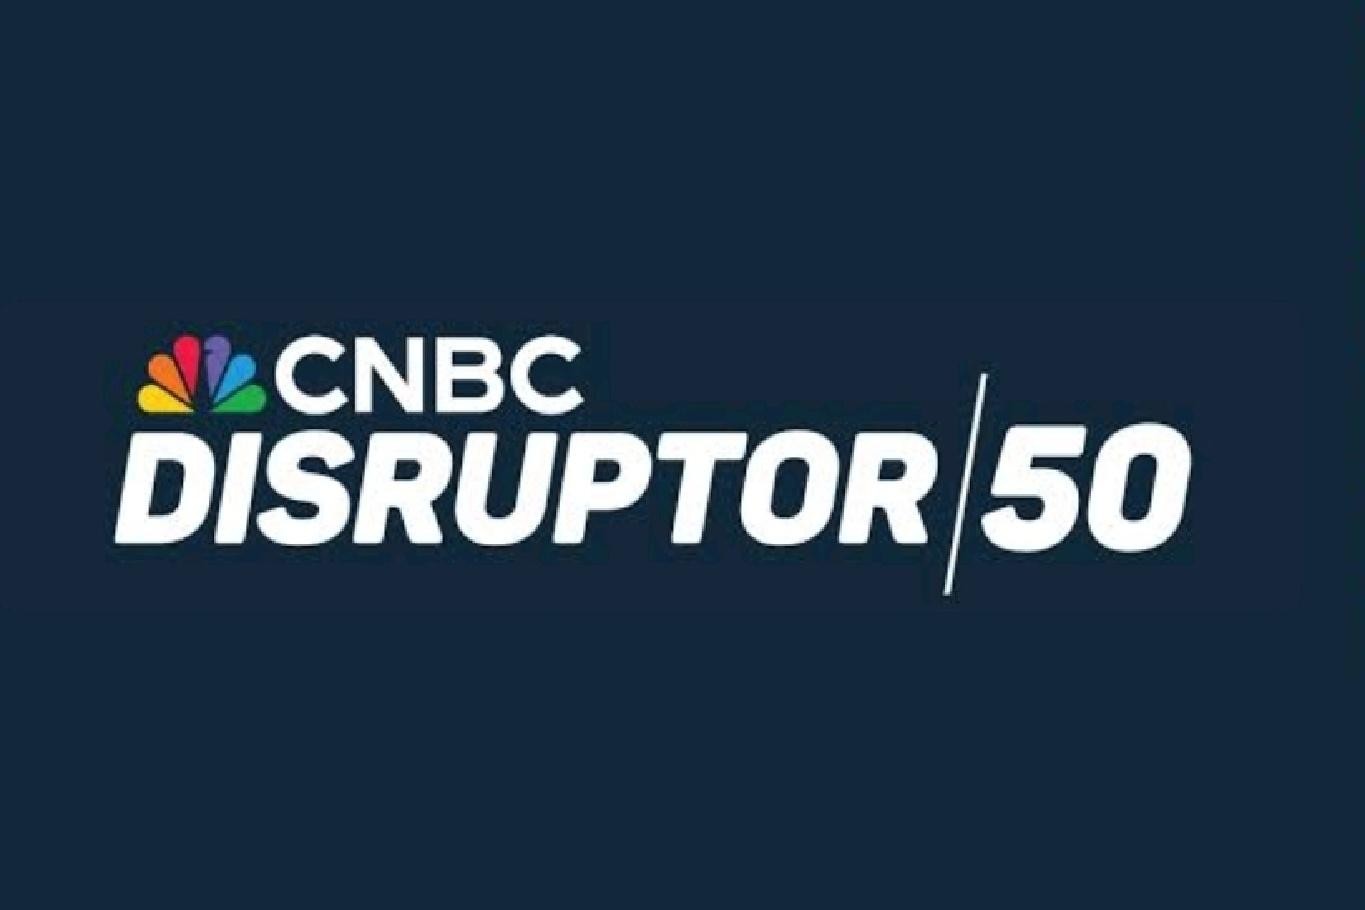 CNBC Disruptor 